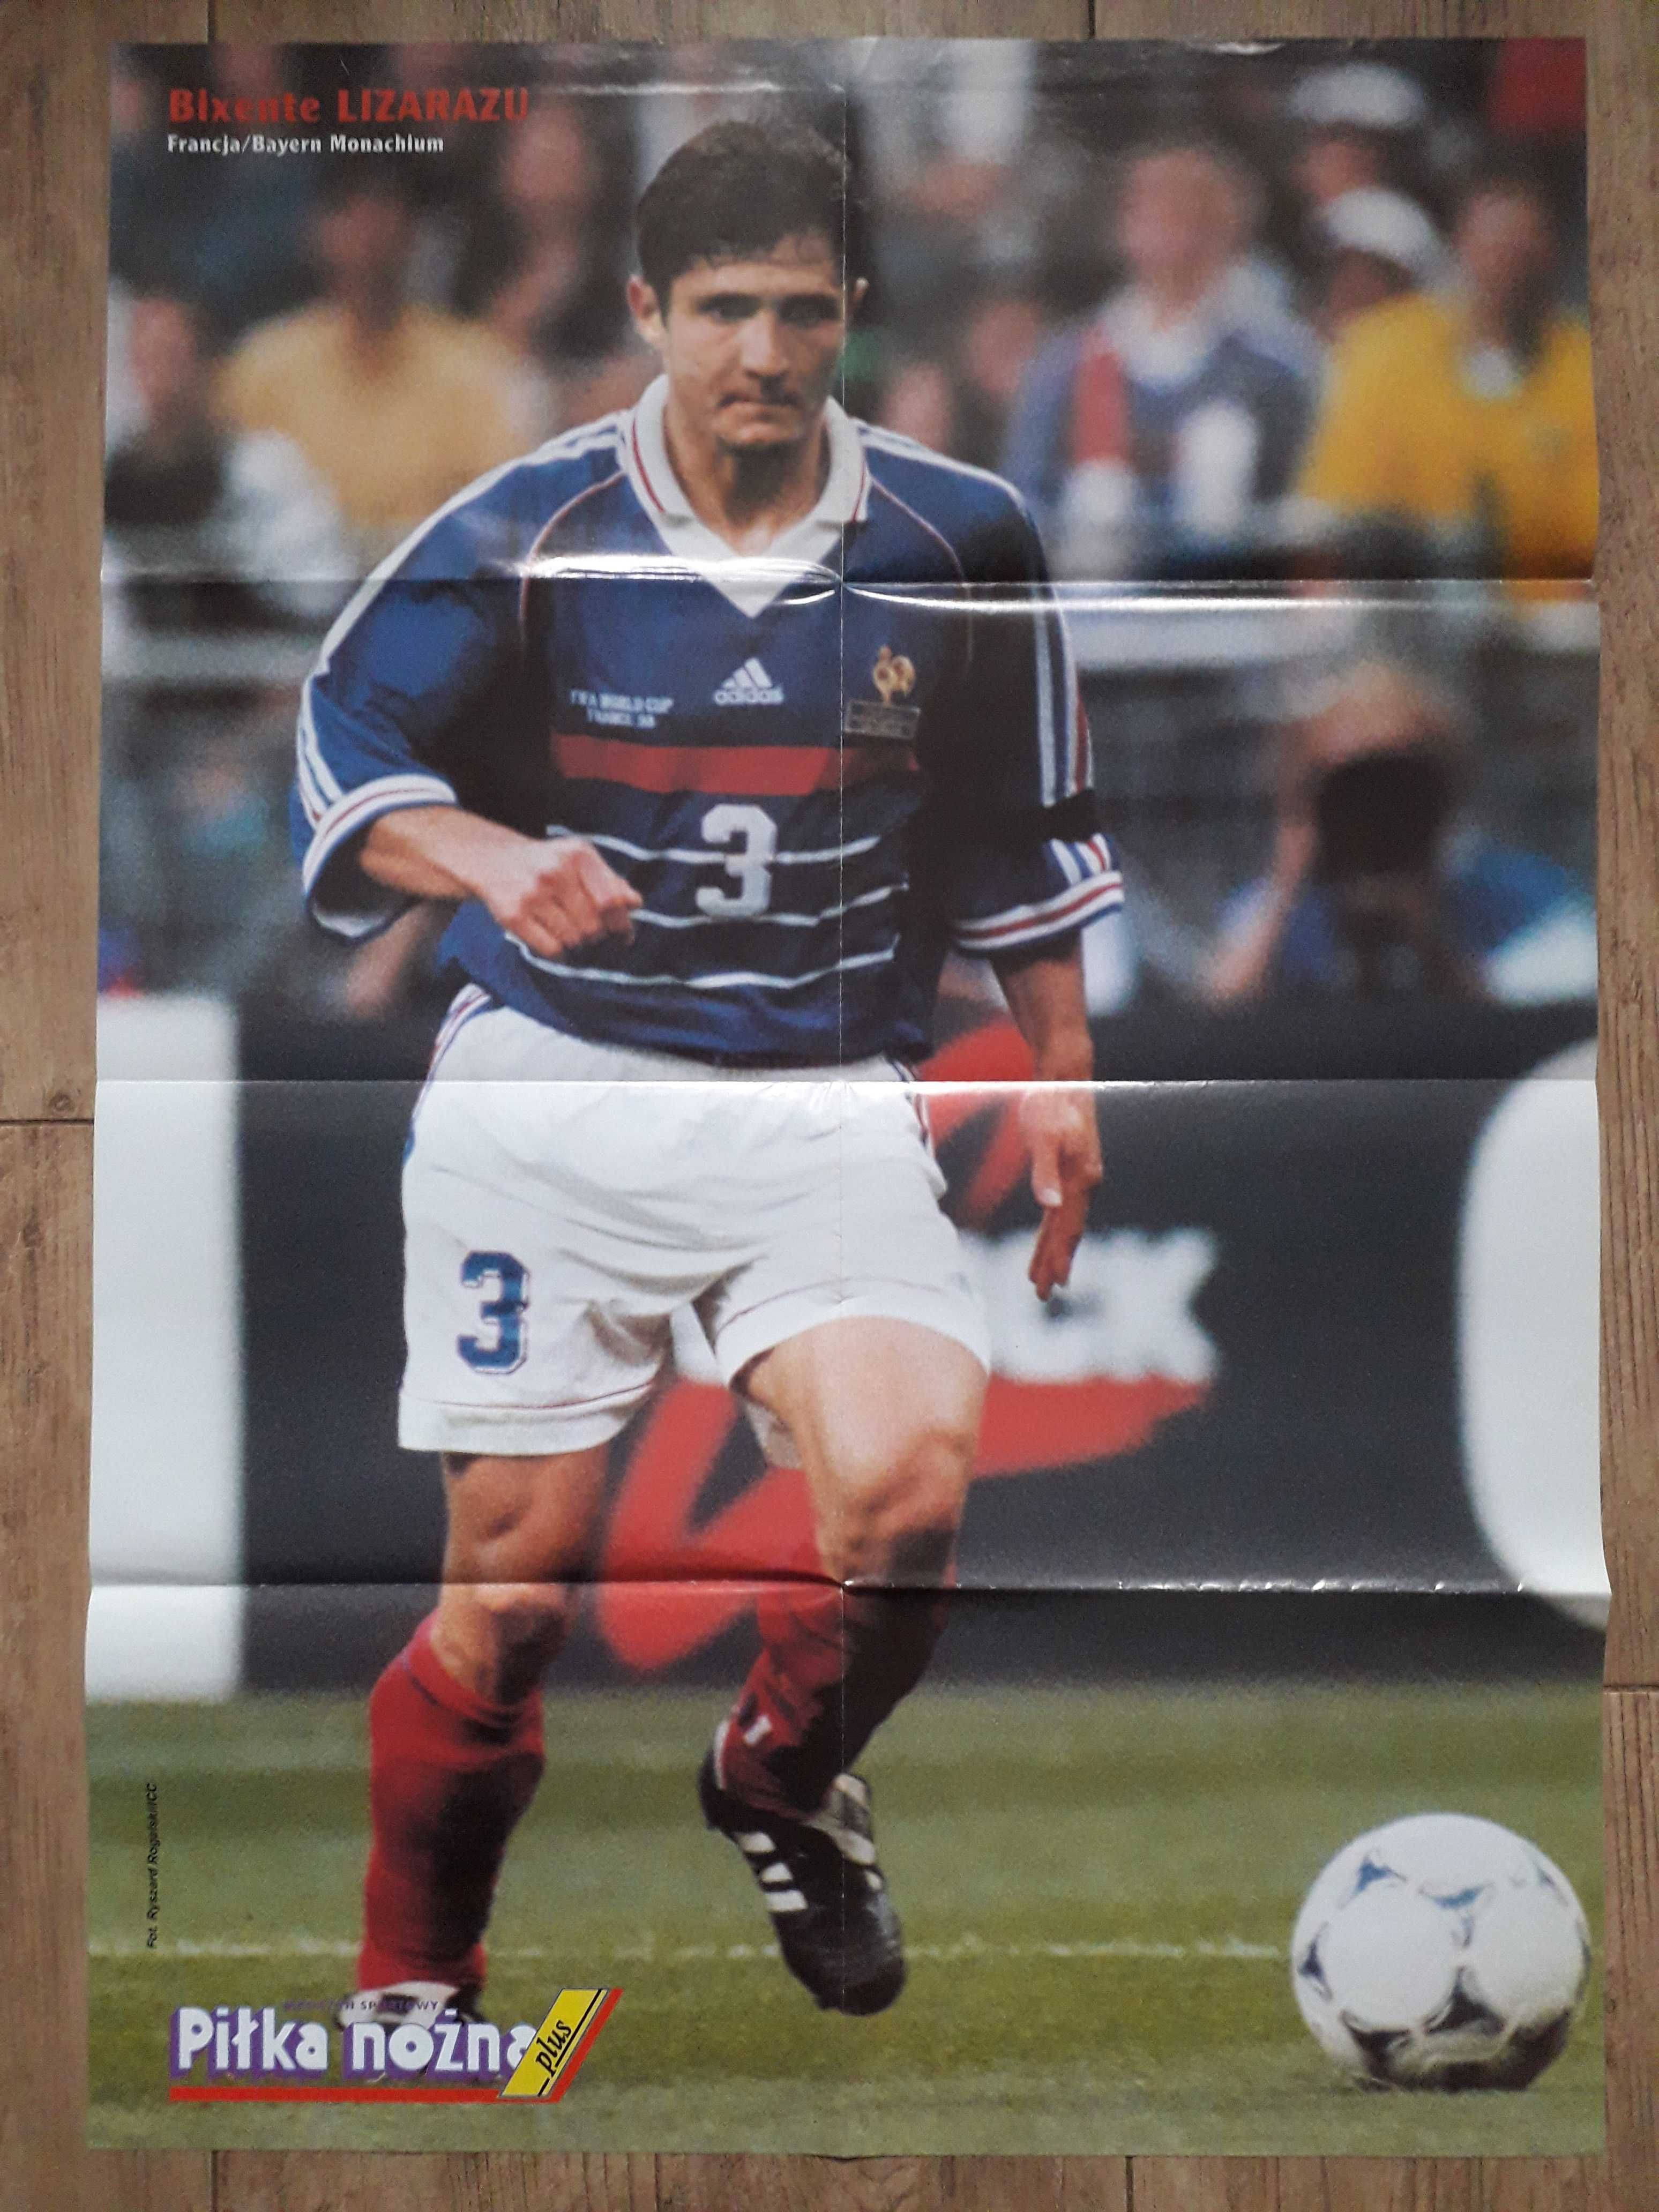 Dwight Yourk (Manchester United) / Bixente Lizarazu (Francja) - plakat